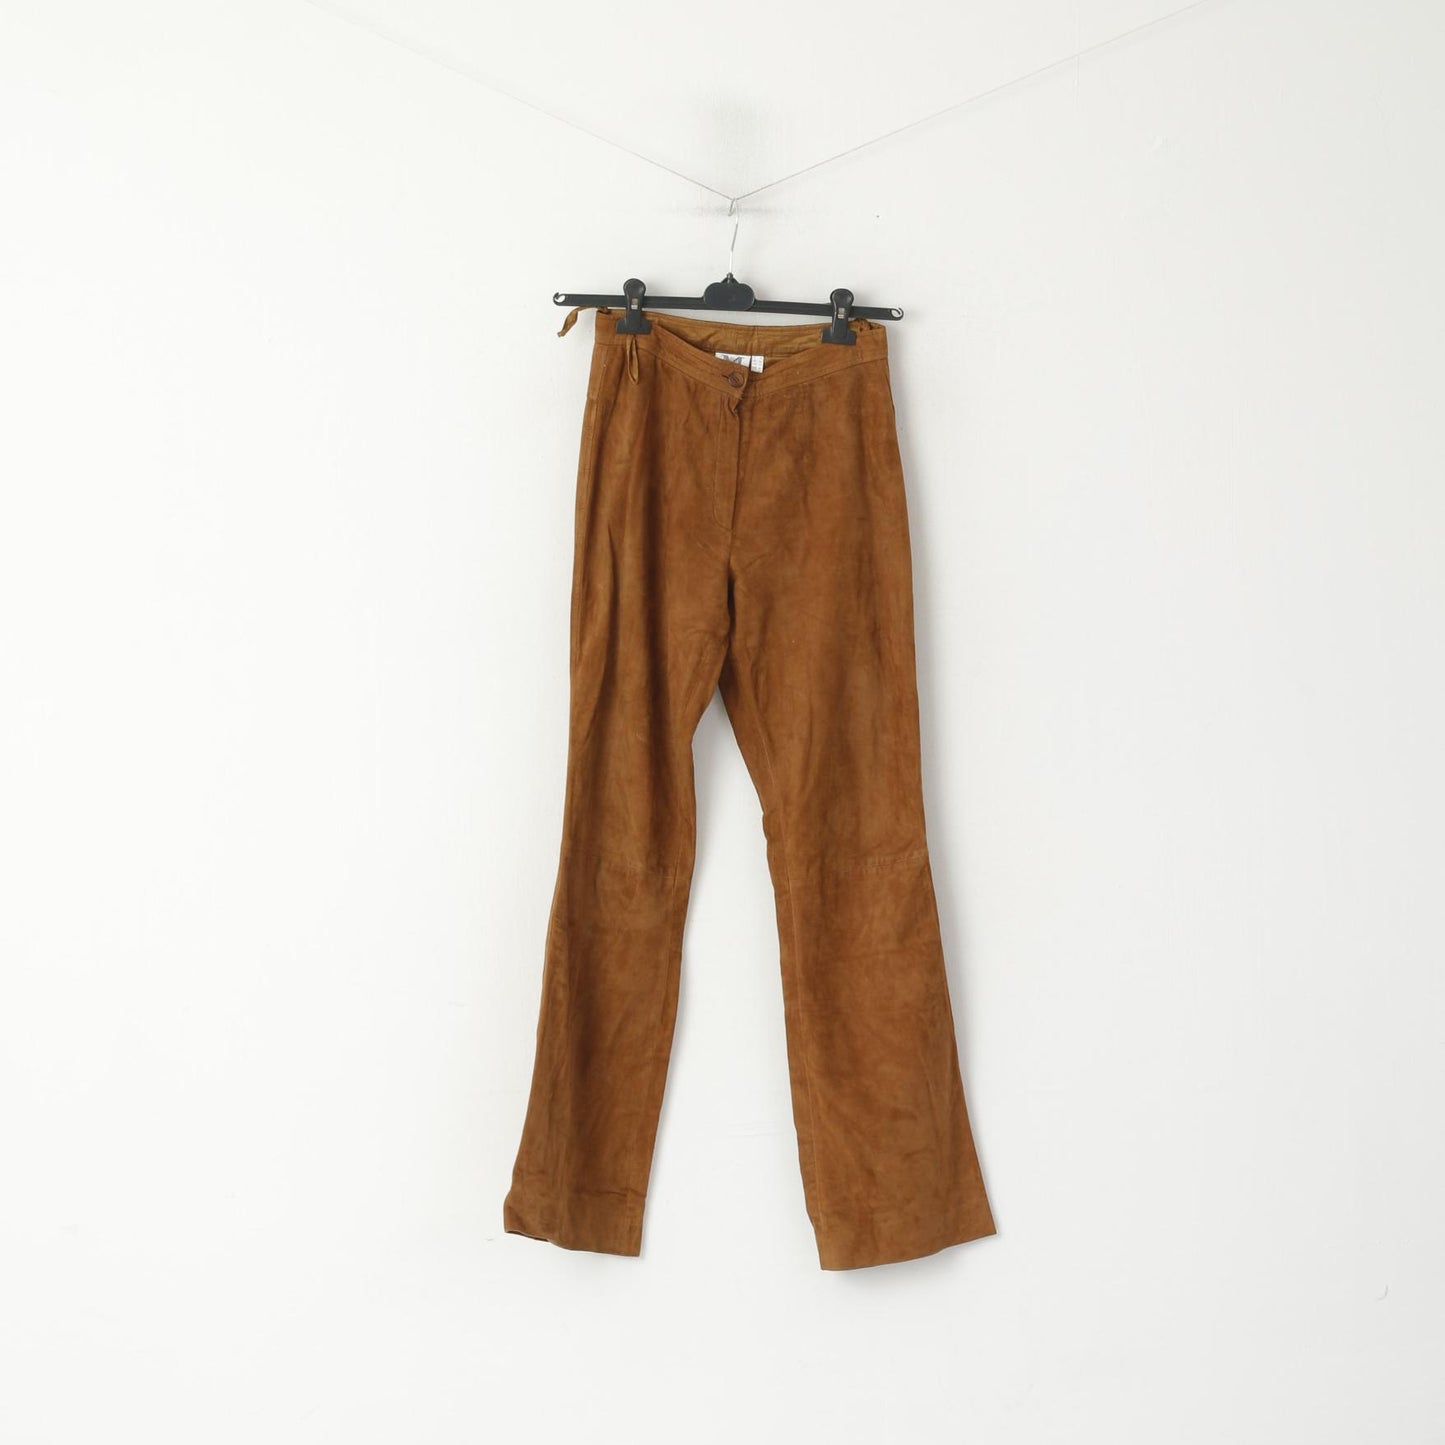 MILANO Di Alba Moda Women 10 36 S Trousers Camel Leather Suede Vintage Pants